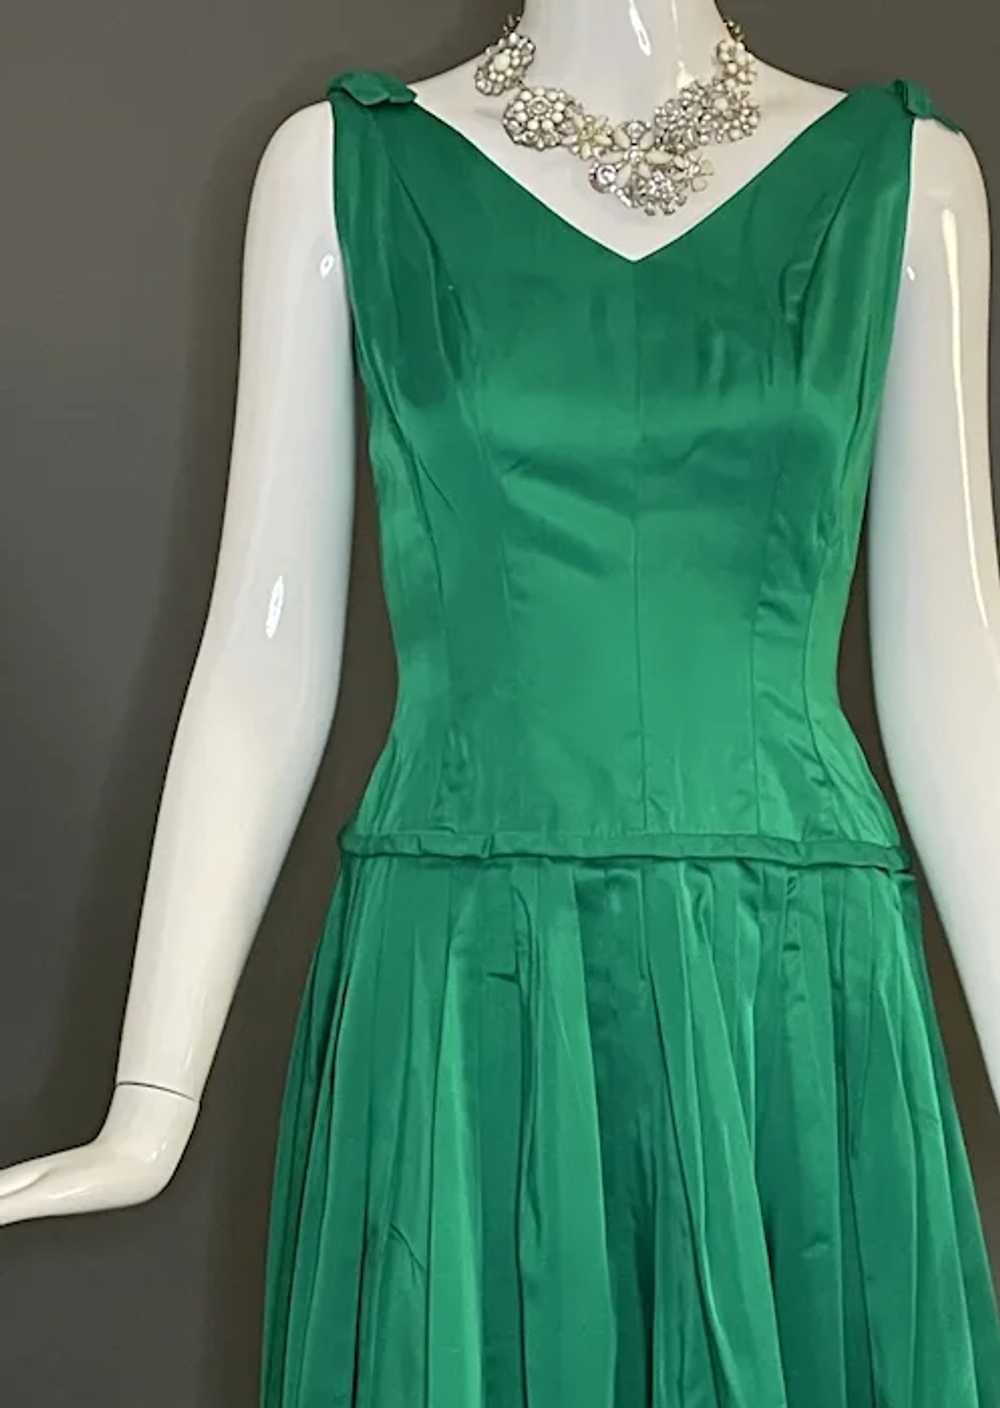 Emerald Green Vintage Satin Party Dress XS - image 8